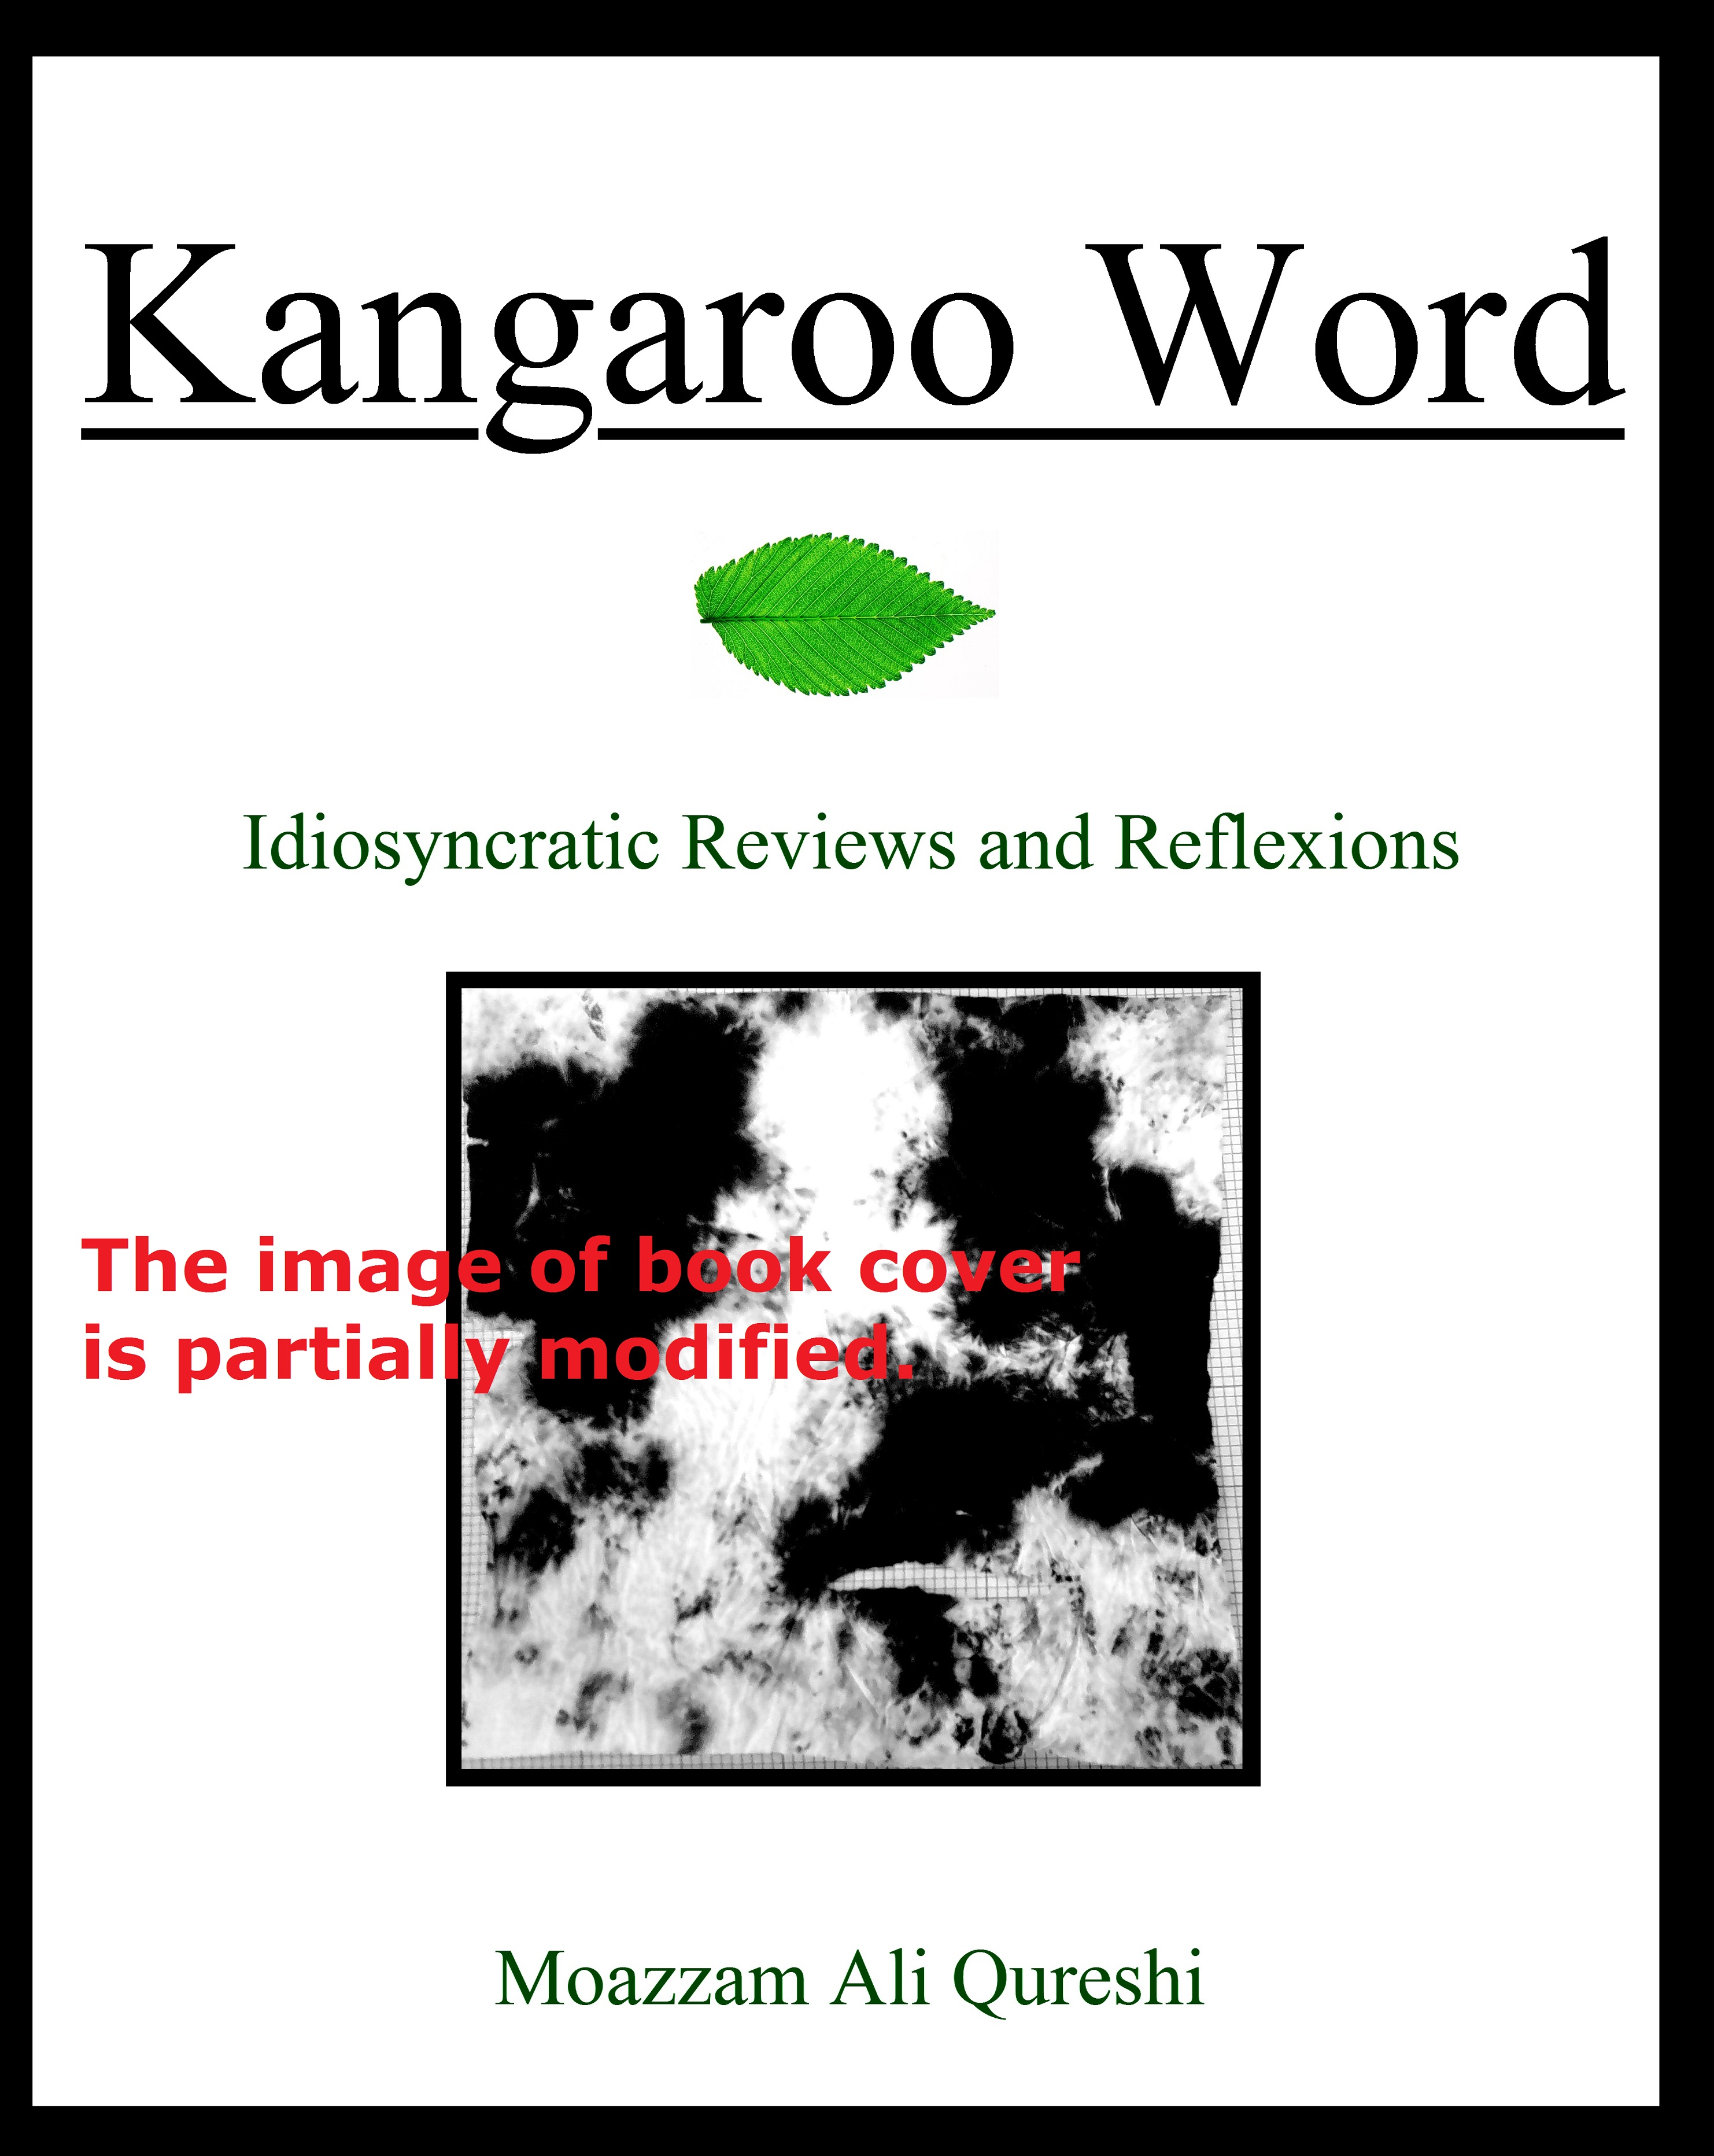 kangaroo word